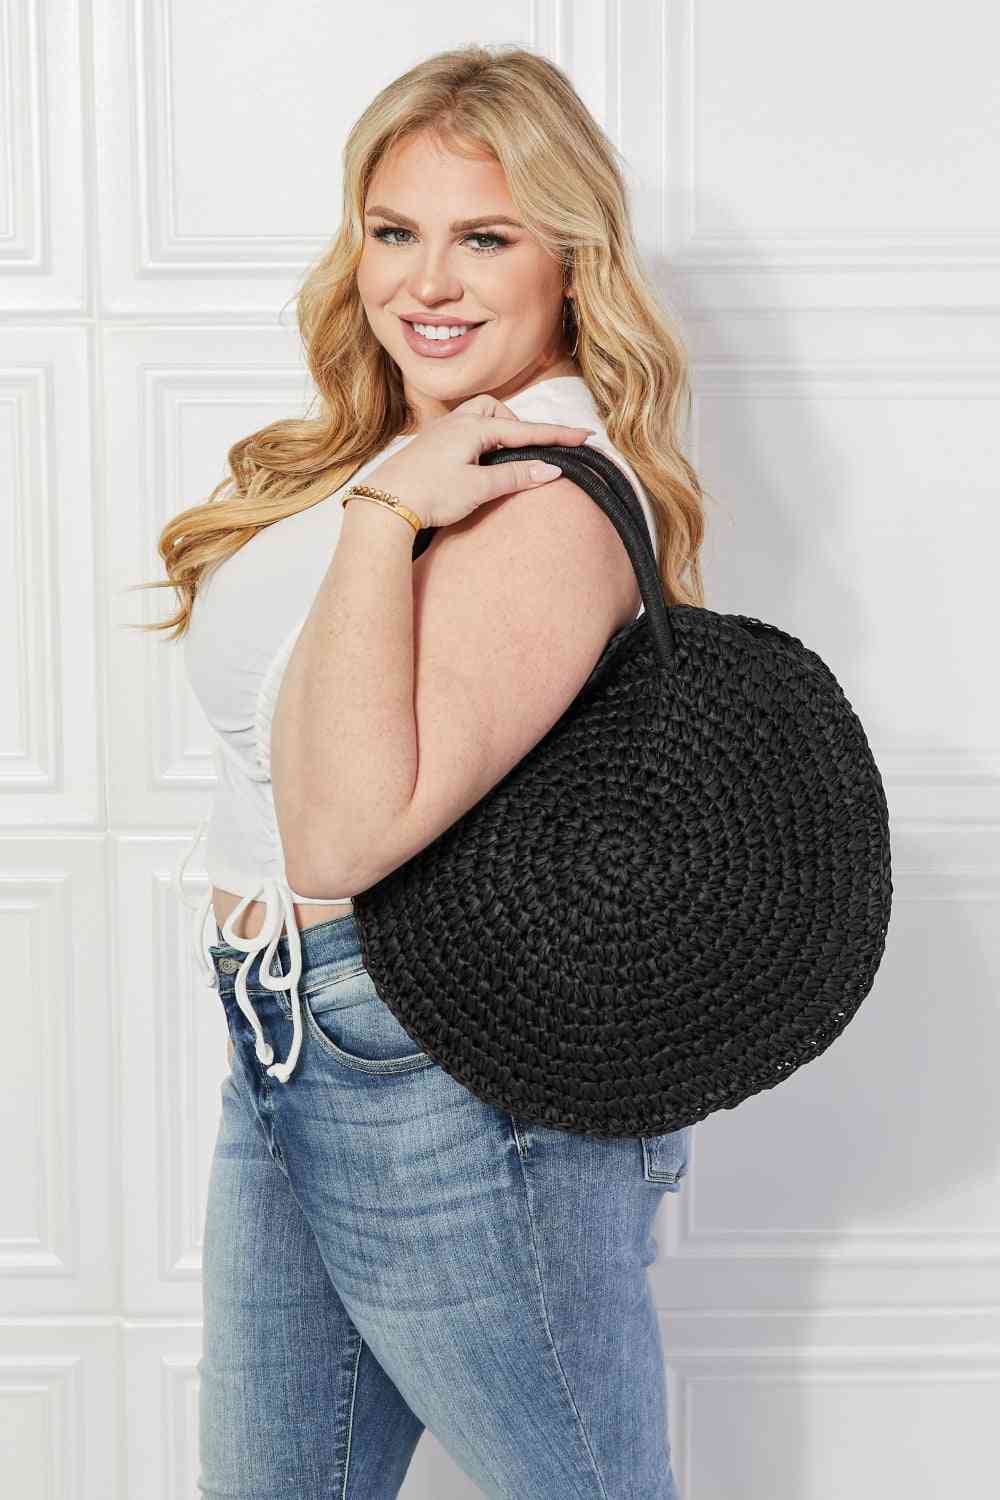 Beach Date Straw Rattan Handbag in Black for Women | Bag | Ro + Ivy